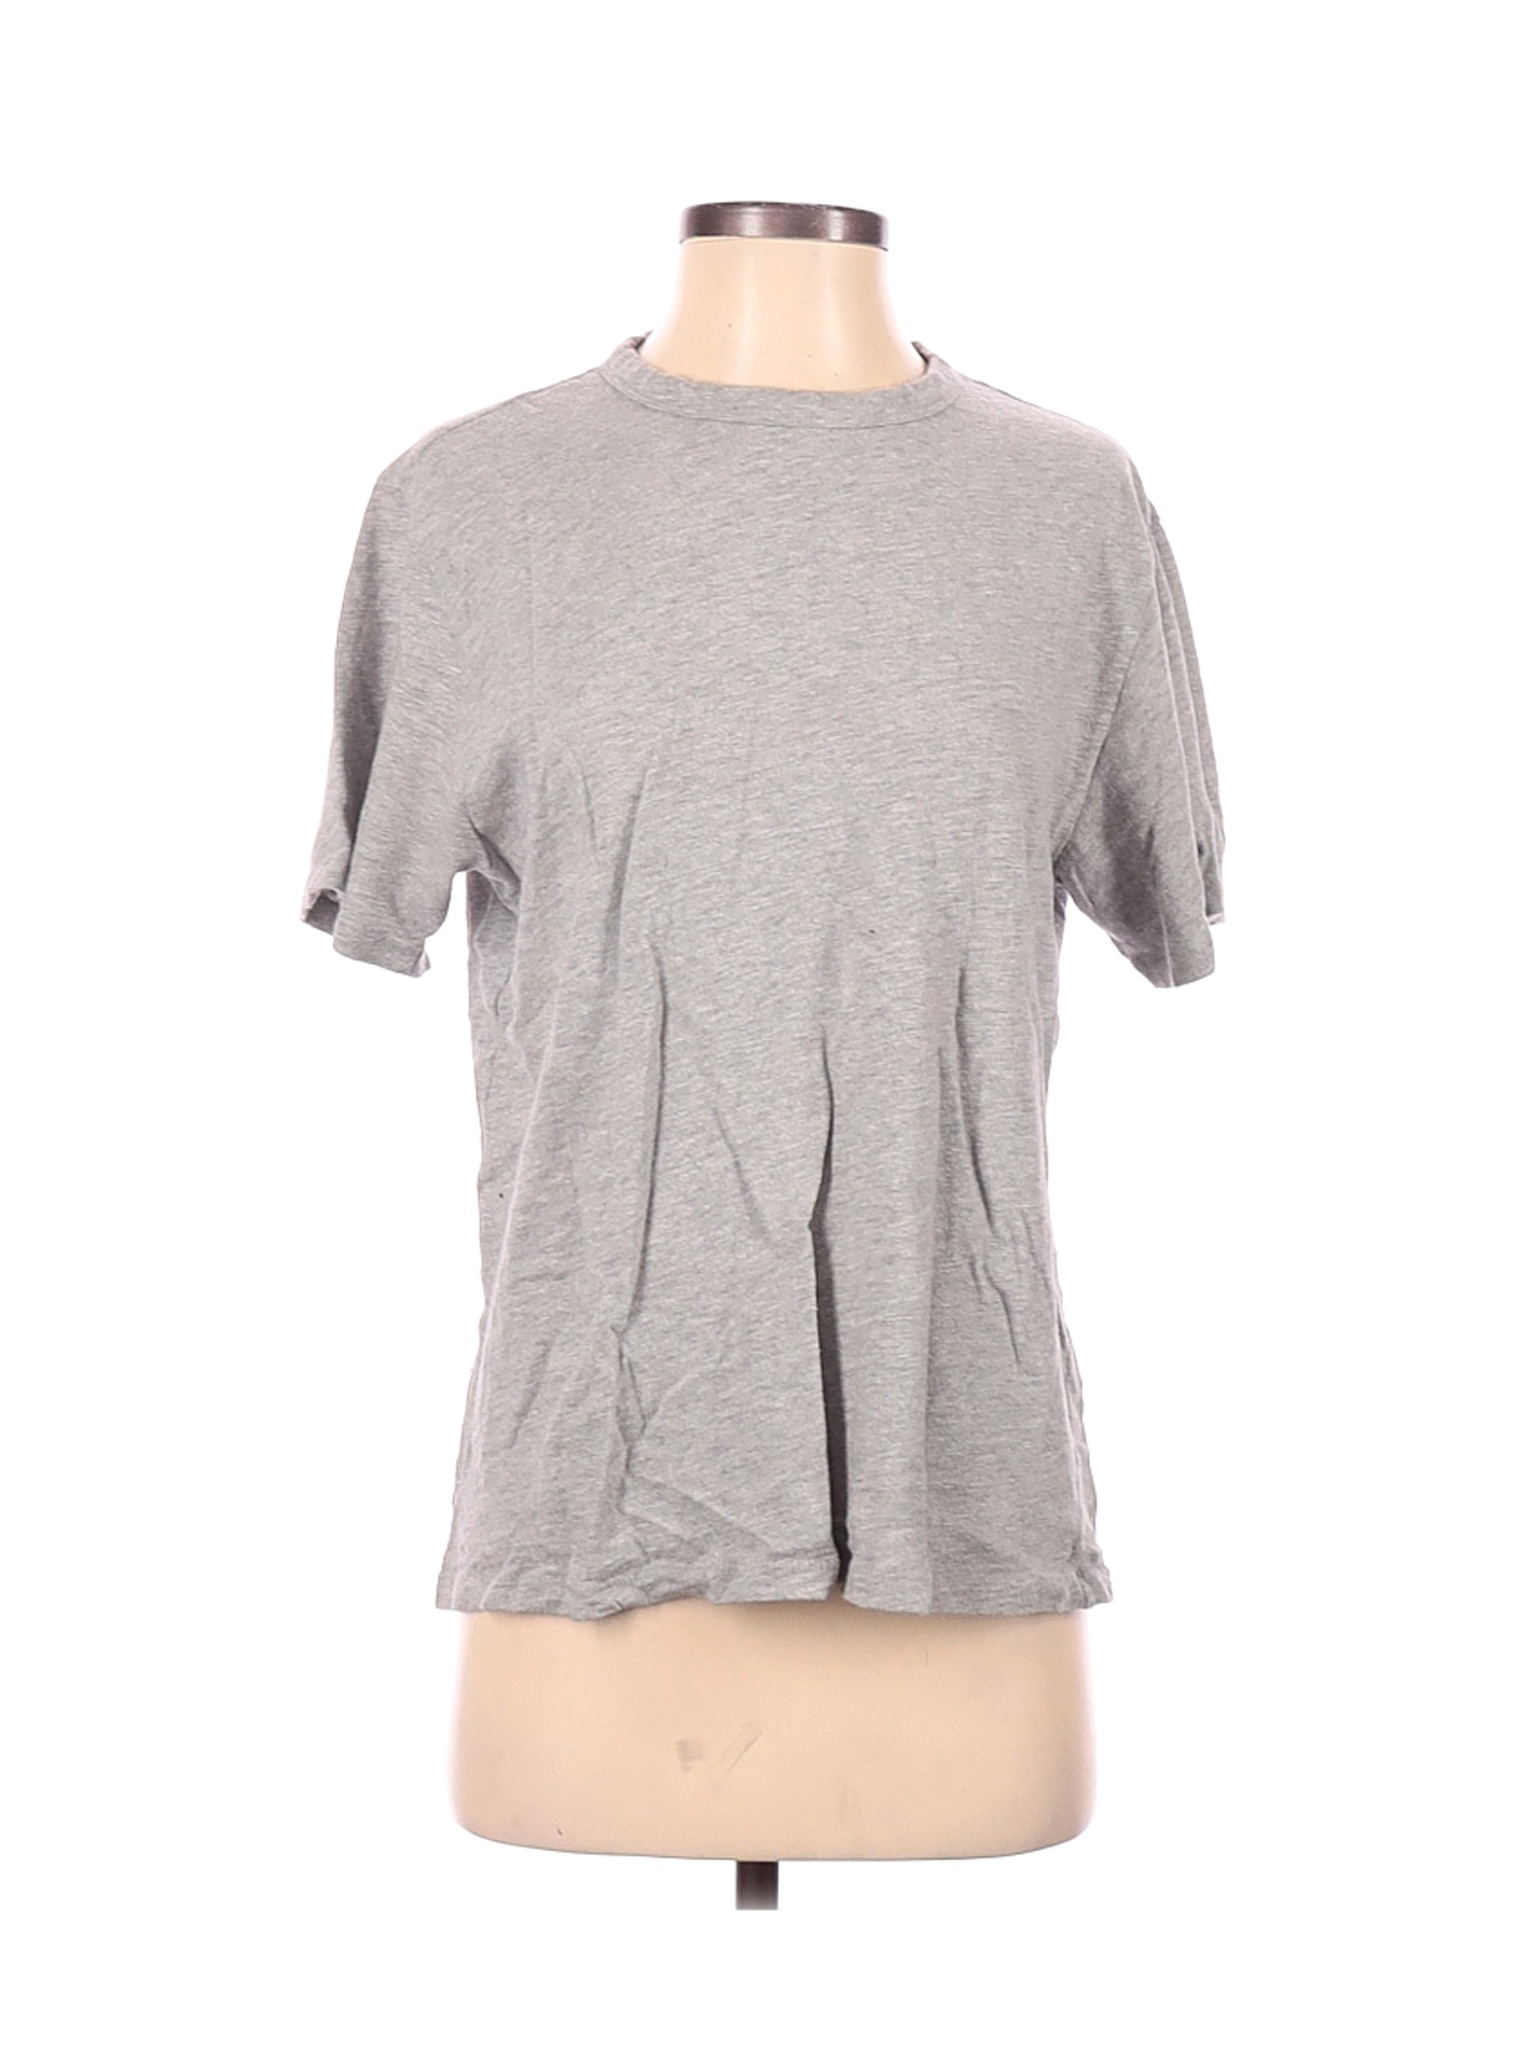 Muji Women Gray Short Sleeve T-Shirt S | eBay